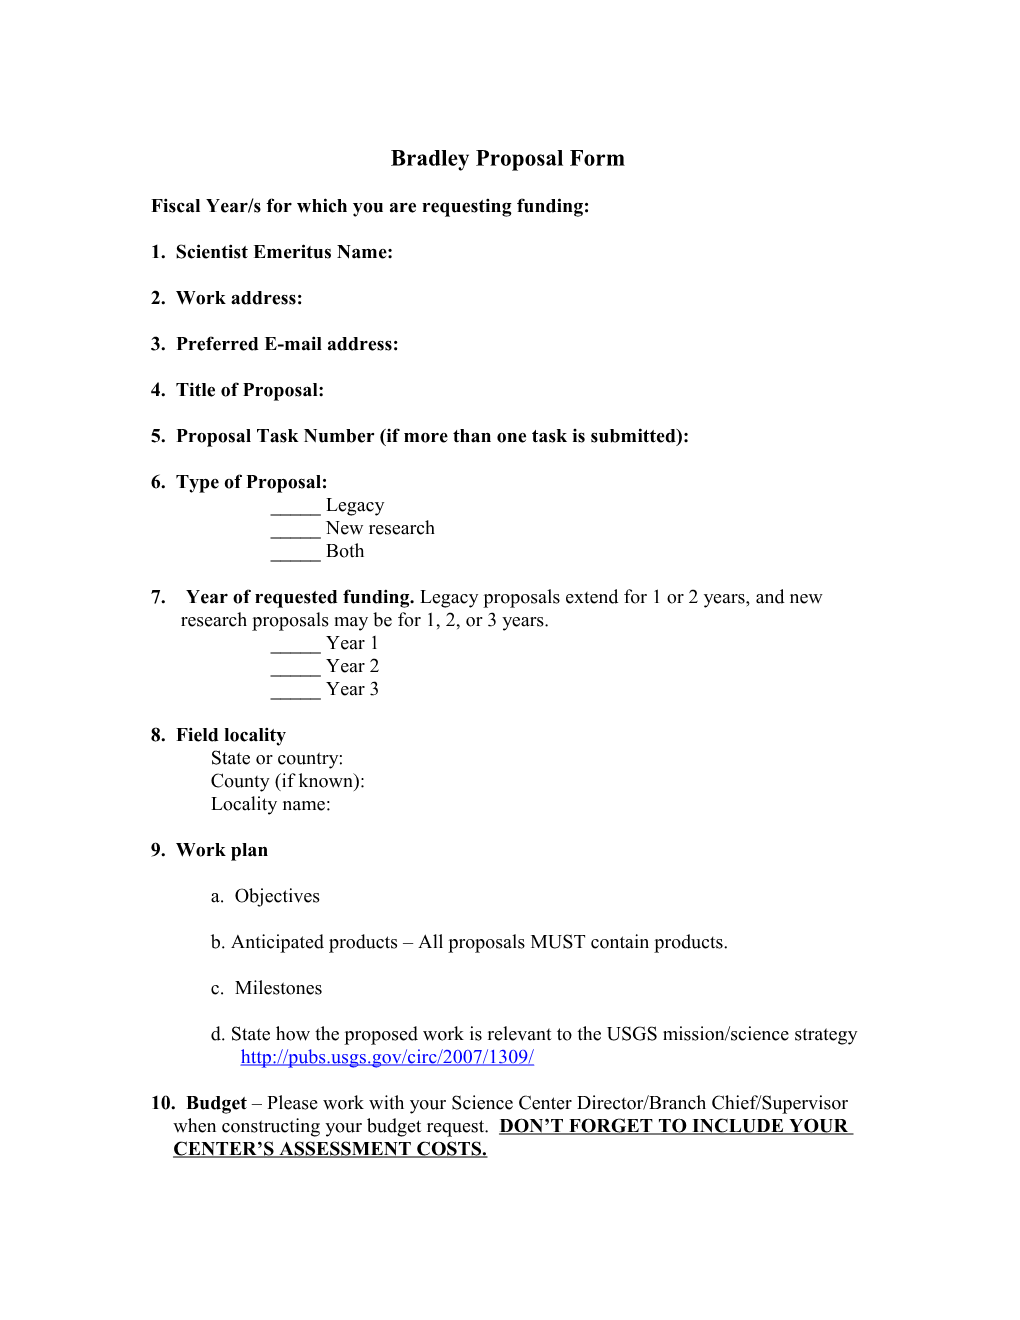 Bradley Proposal Form FY 2008